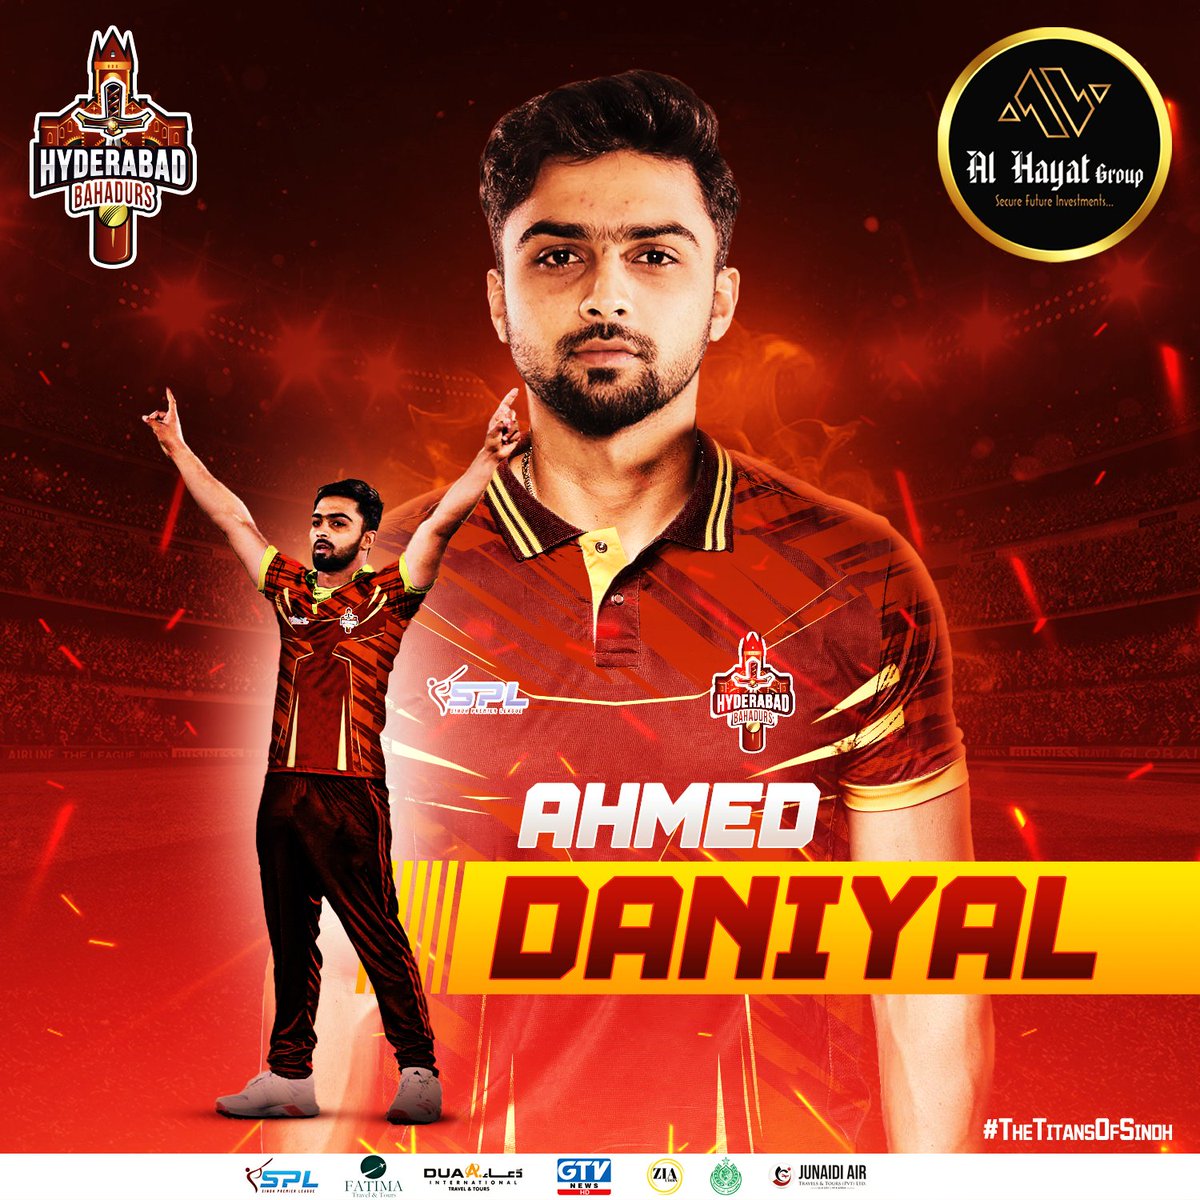 Ahmed Daniyal will be donning Hyderabad Bahadurs colors in #SindhPremierLeague 

#TitansOfSindh | #AlHayatGroup | #SPL